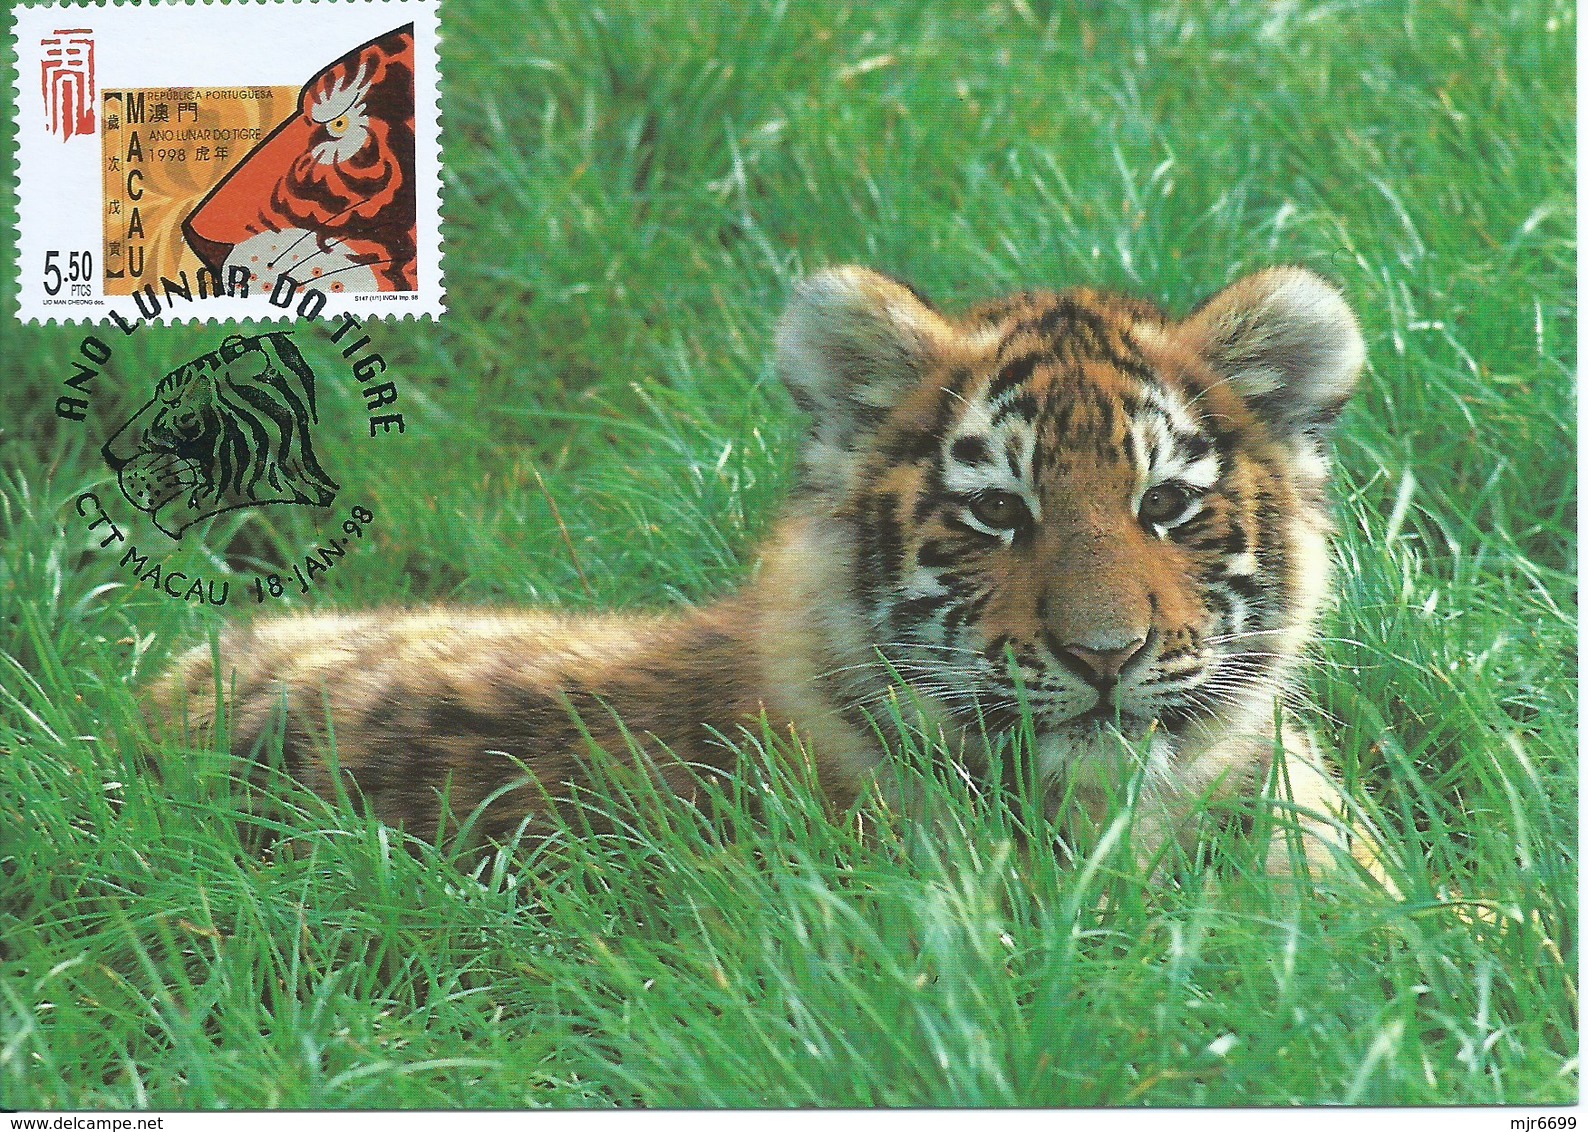 MACAU 1998 LUNAR YEAR OF THE TIGER MAXIMUN CARD, WWF CARD - Cartoline Maximum